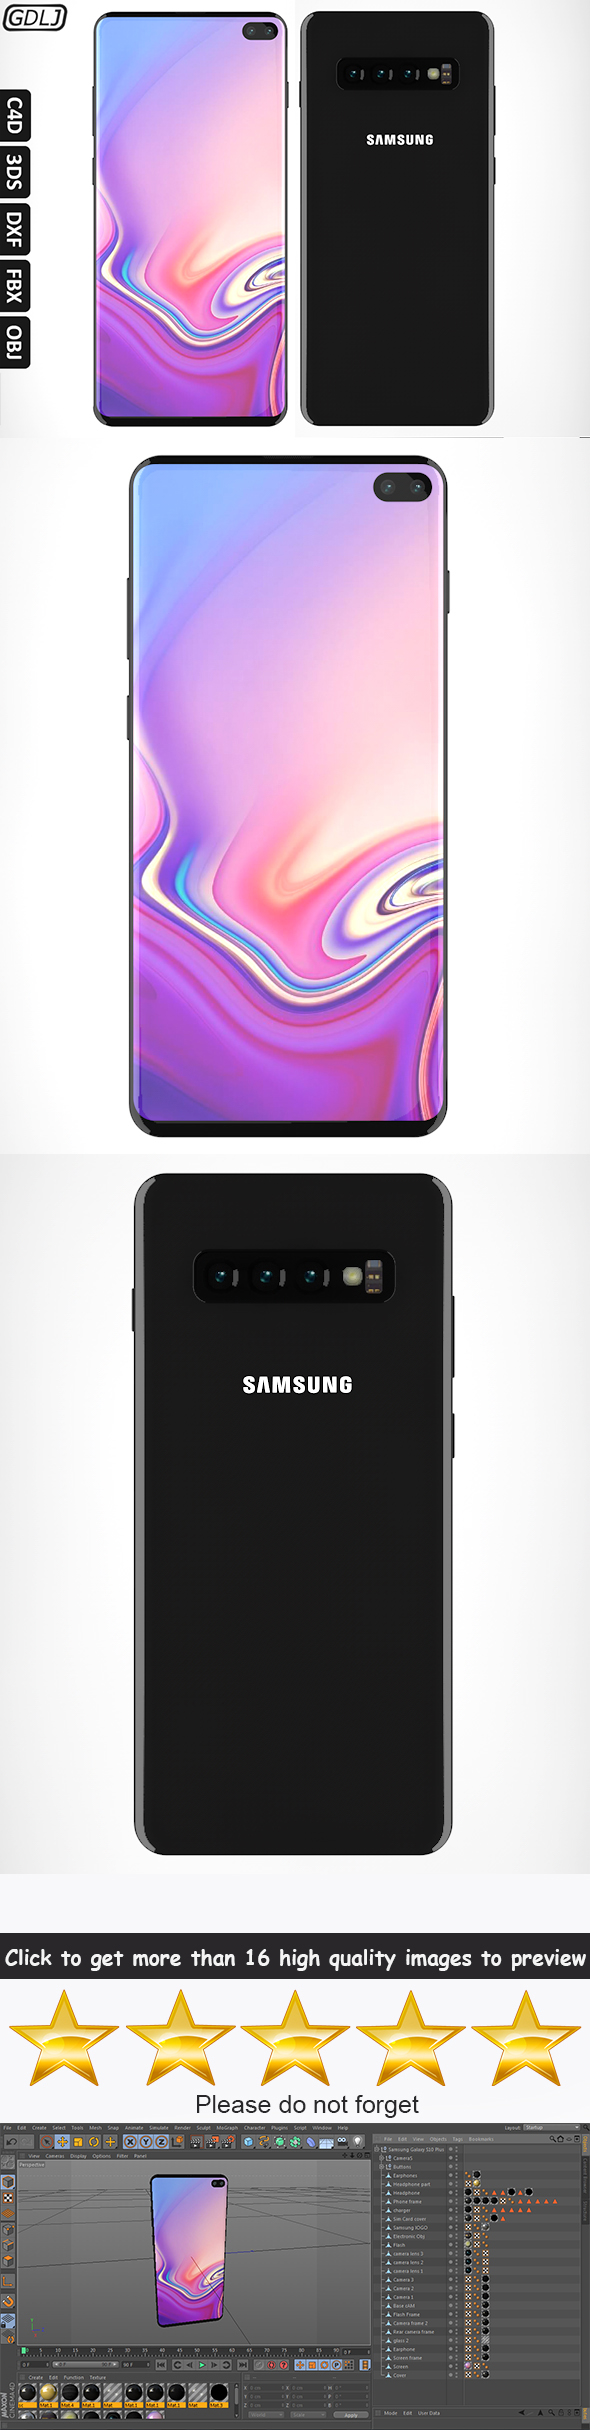 Samsung Galaxy S10 - 3Docean 23292232